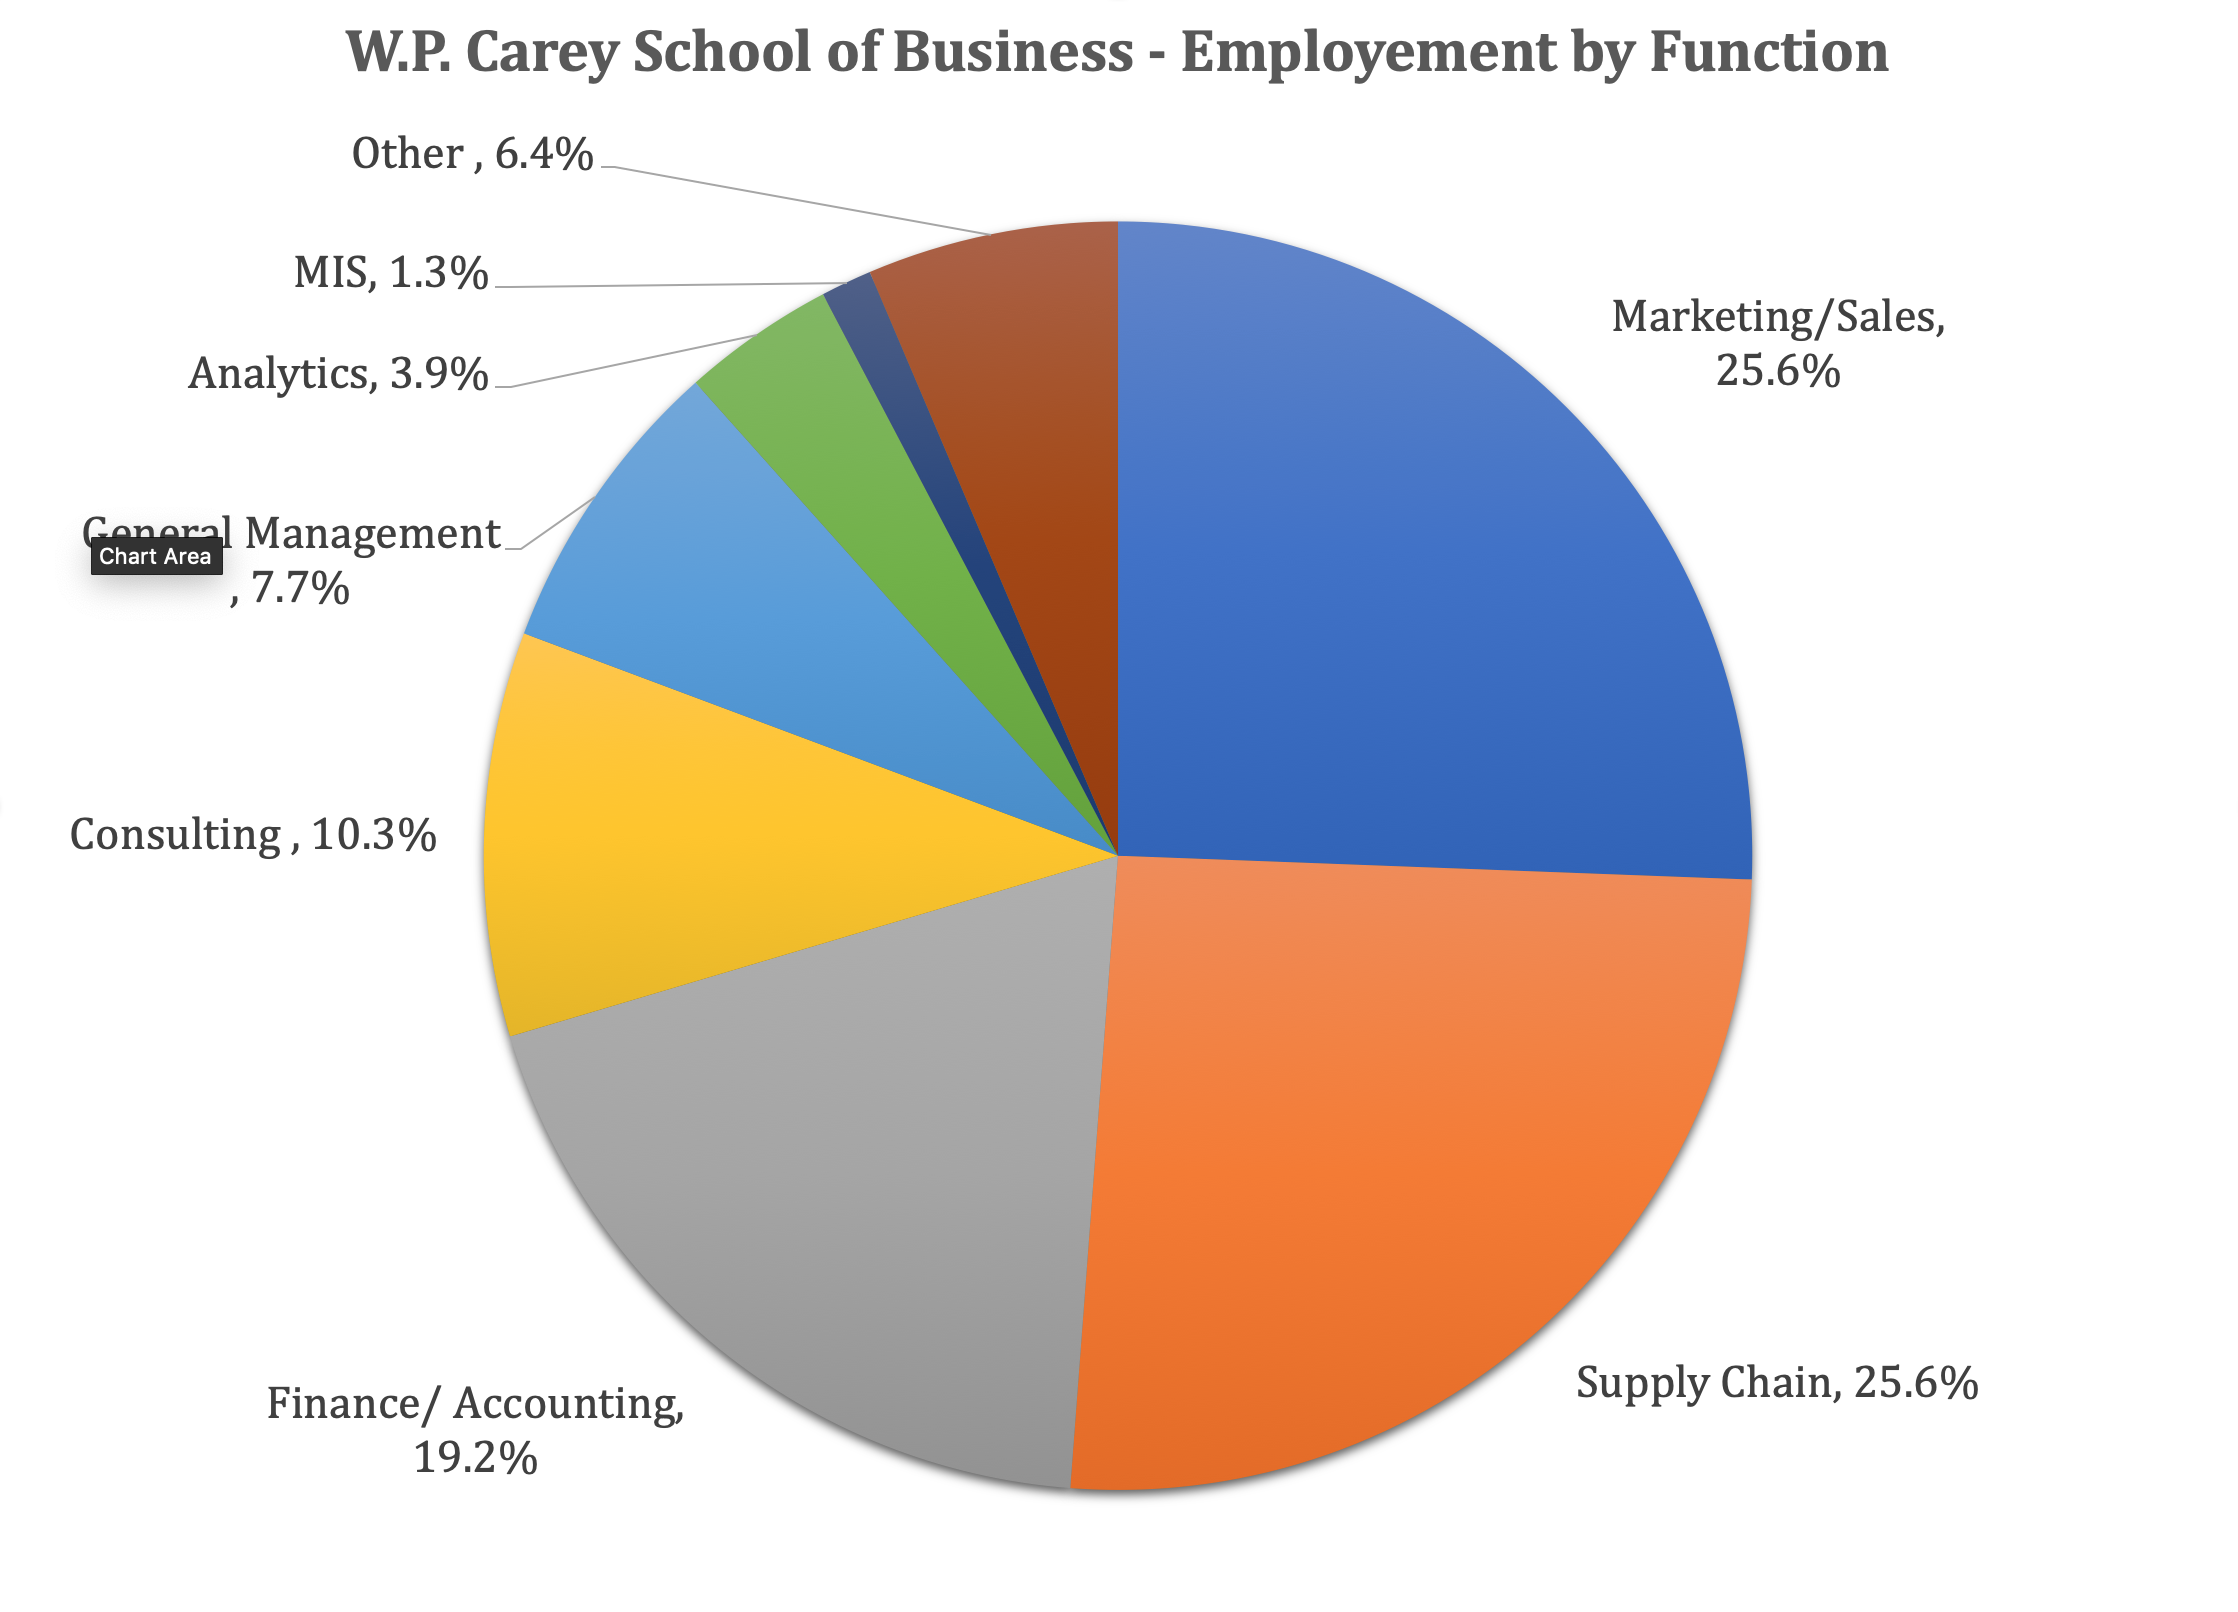 ASU MBA Program - W.P. Carey School of Business - Employment by Function